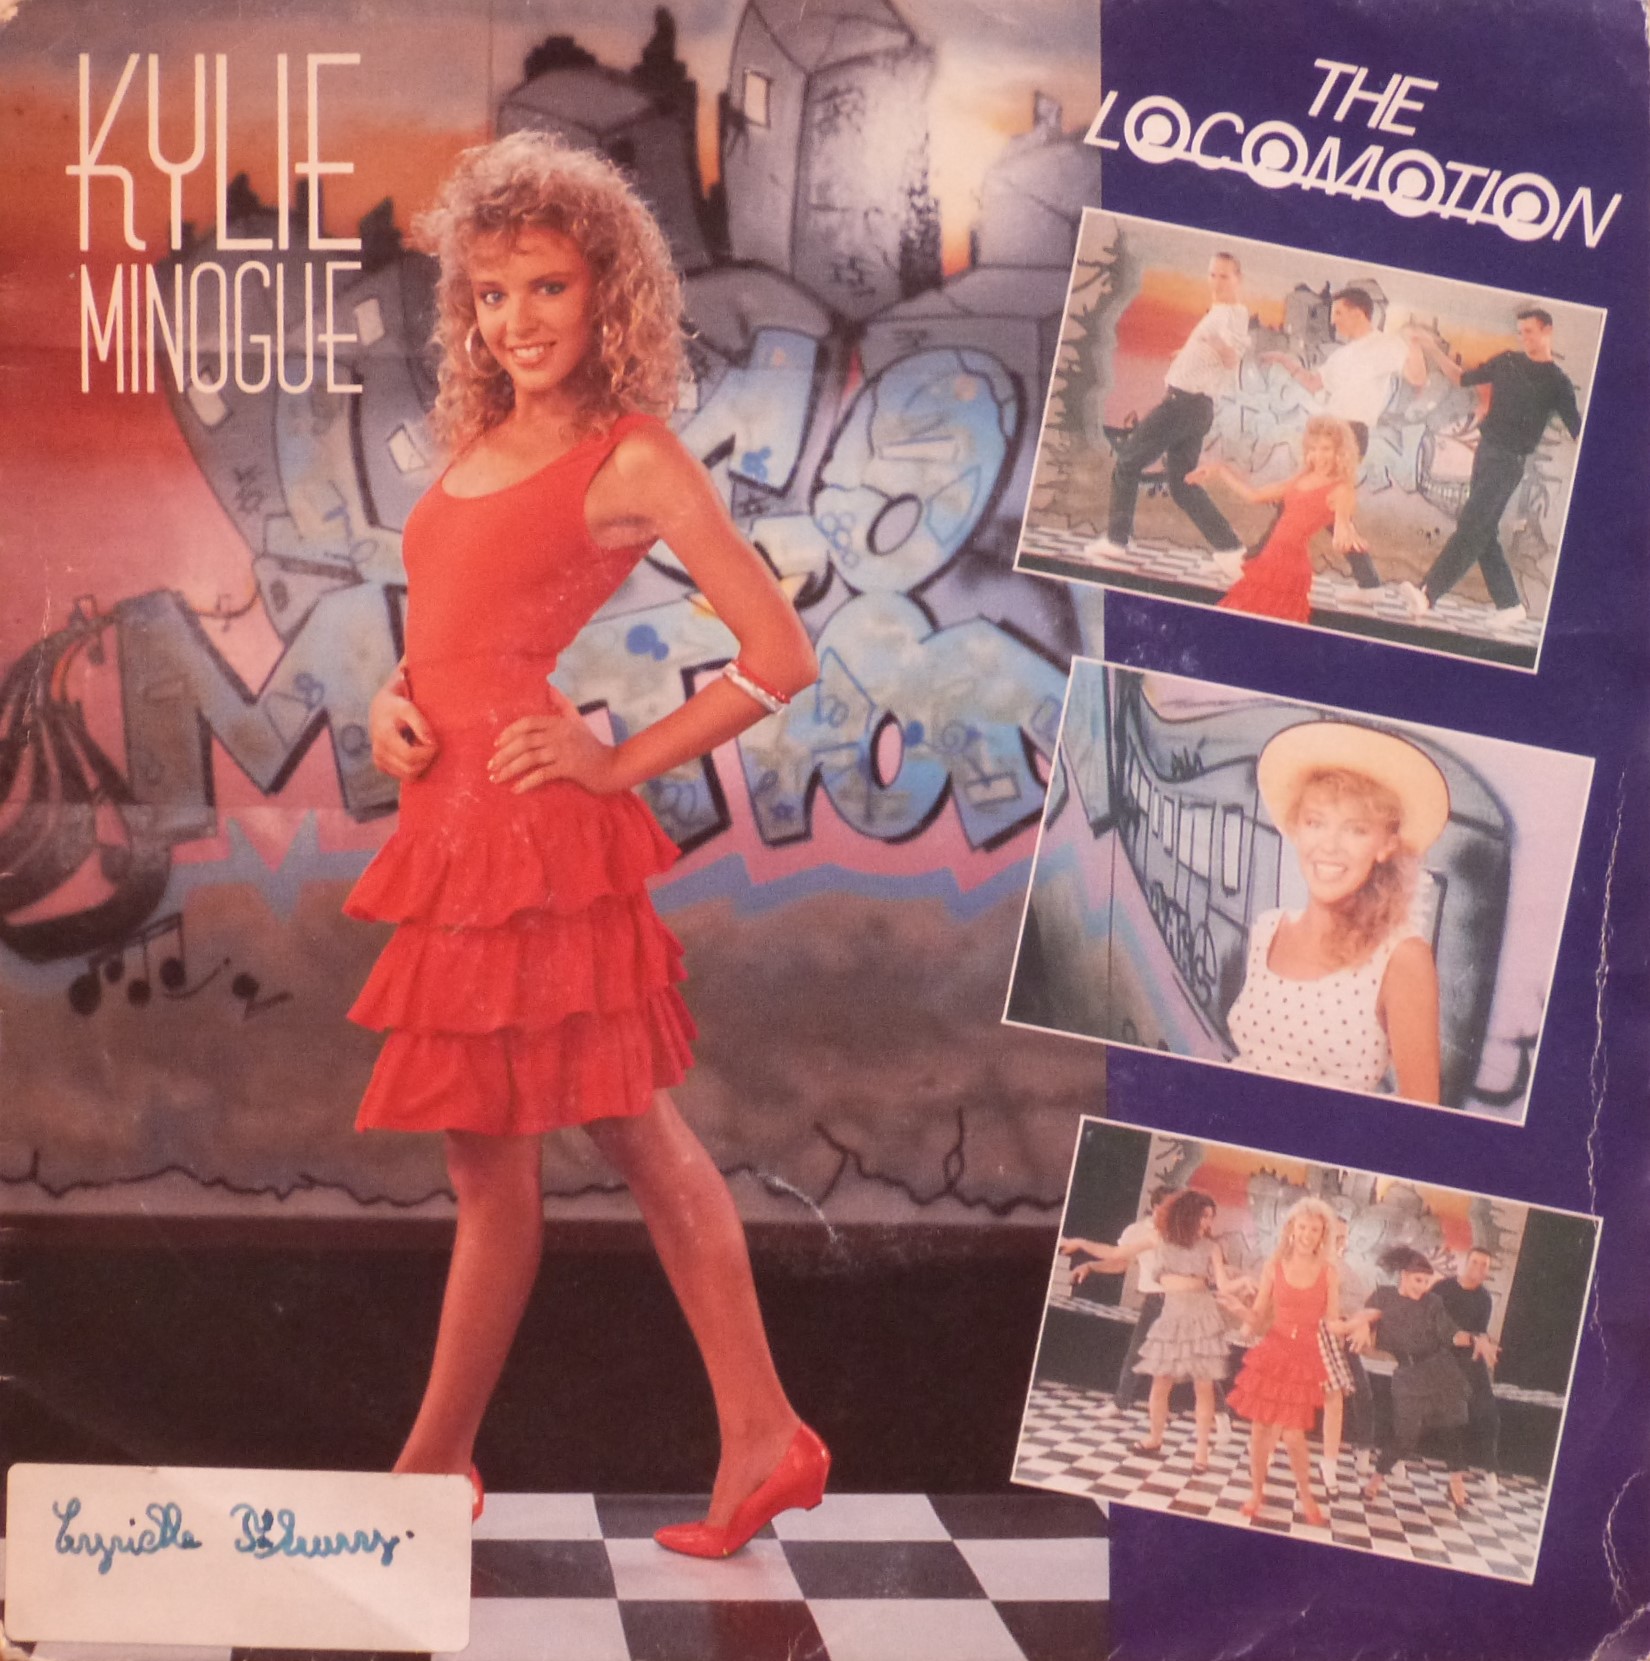 Kylie Minogue, The Locomotion